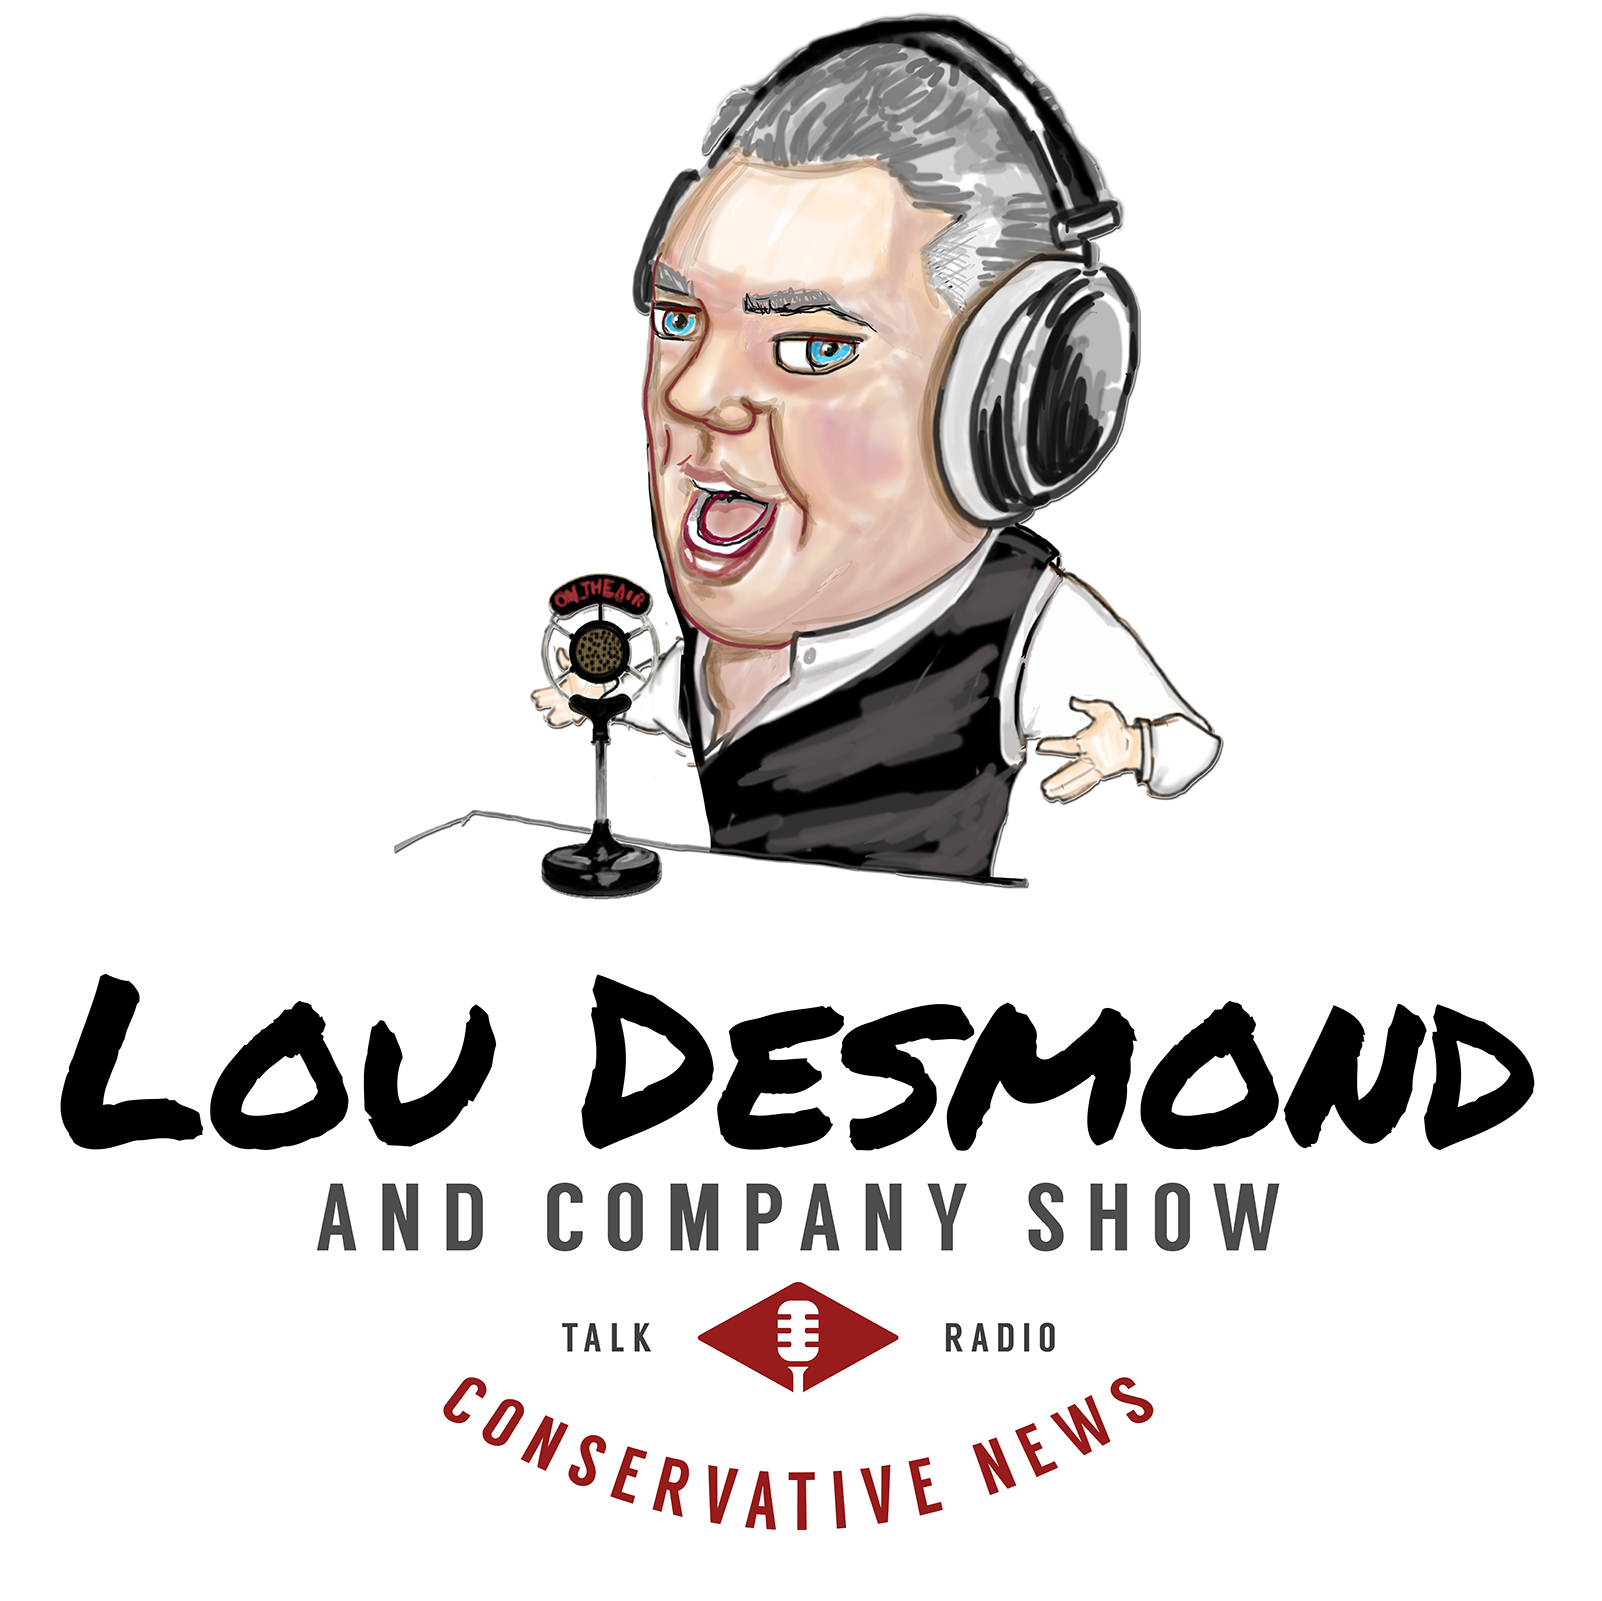 Lou Desmond and Company Show